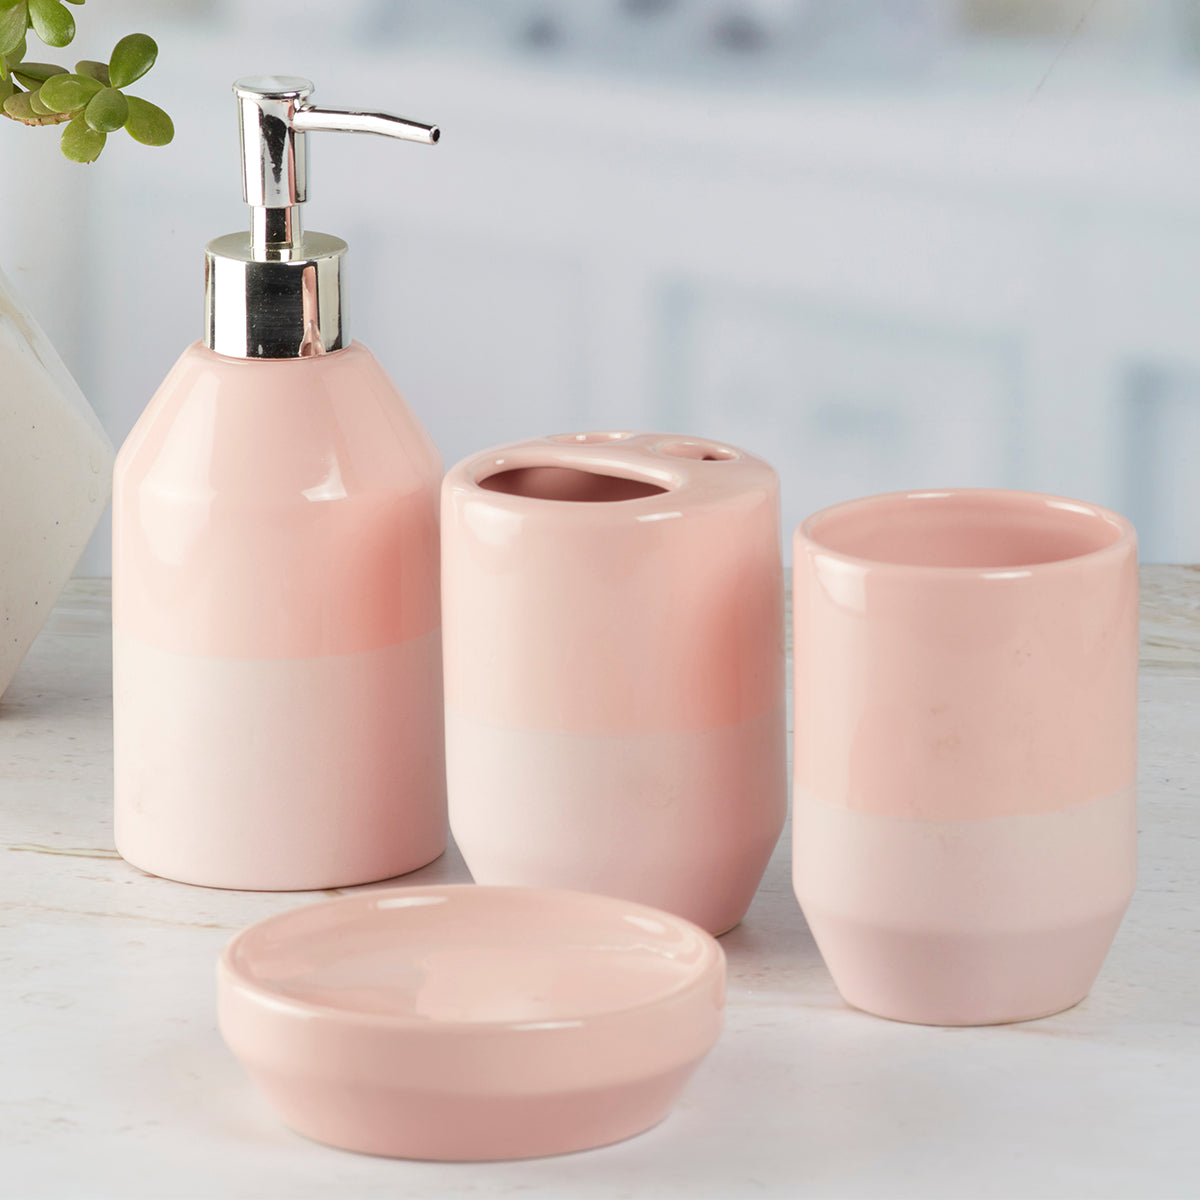 Ceramic Bathroom Accessories Set of 4 Bath Set with Soap Dispenser (9626)